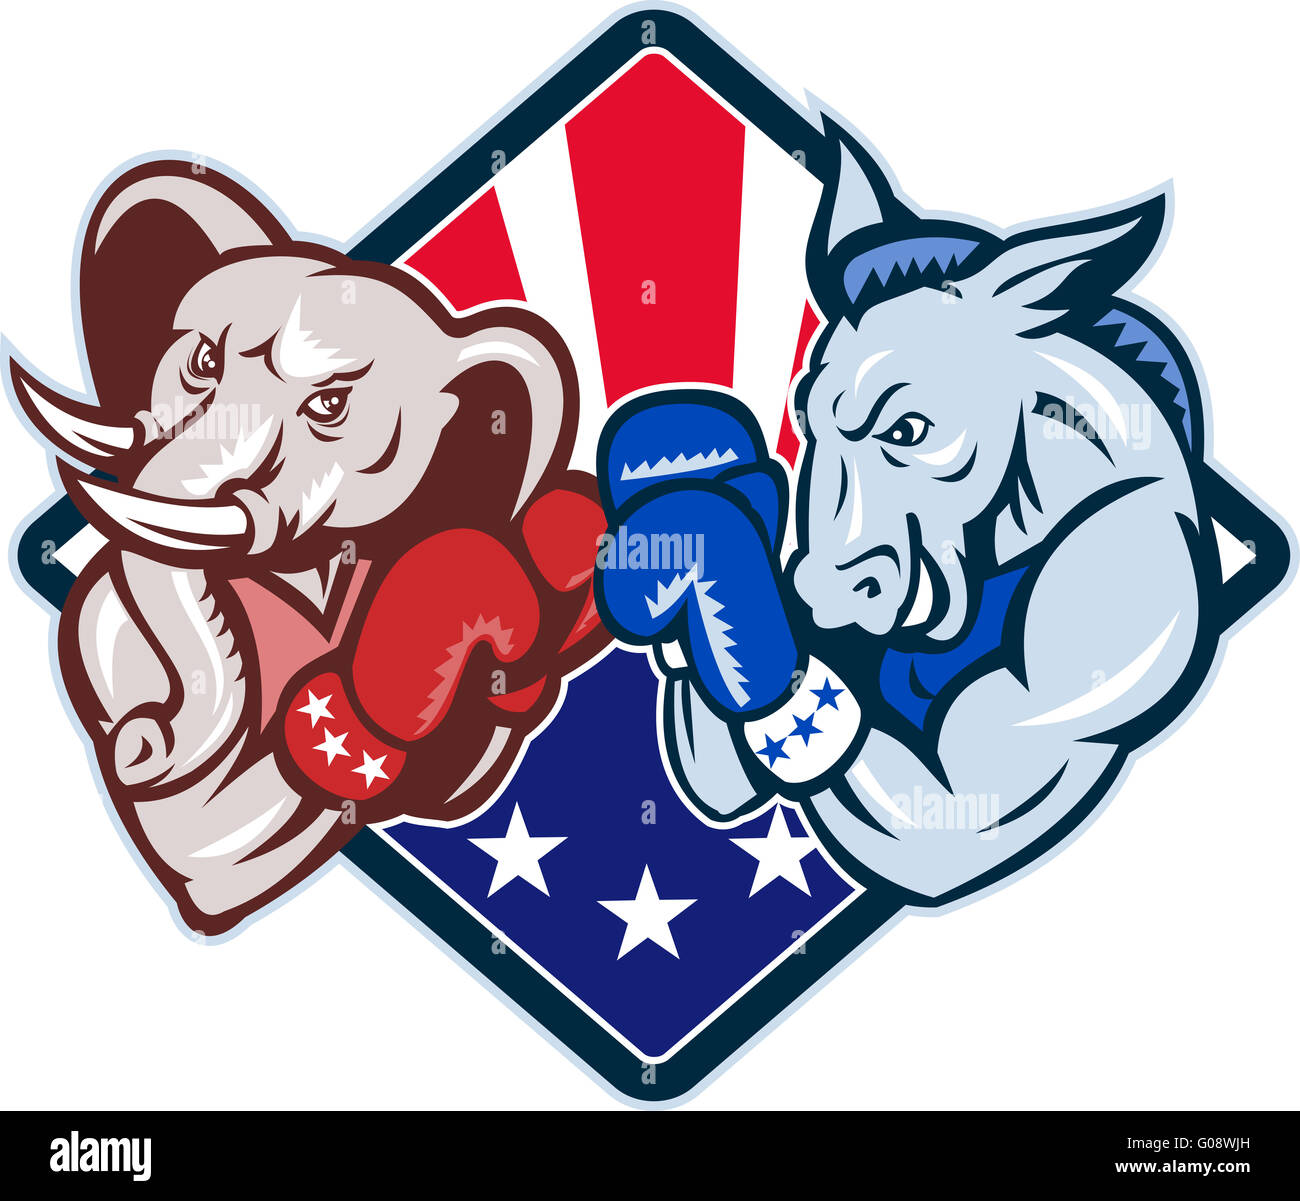 Democrat Donkey Republican Elephant Mascot Boxing Stock Photo - Alamy